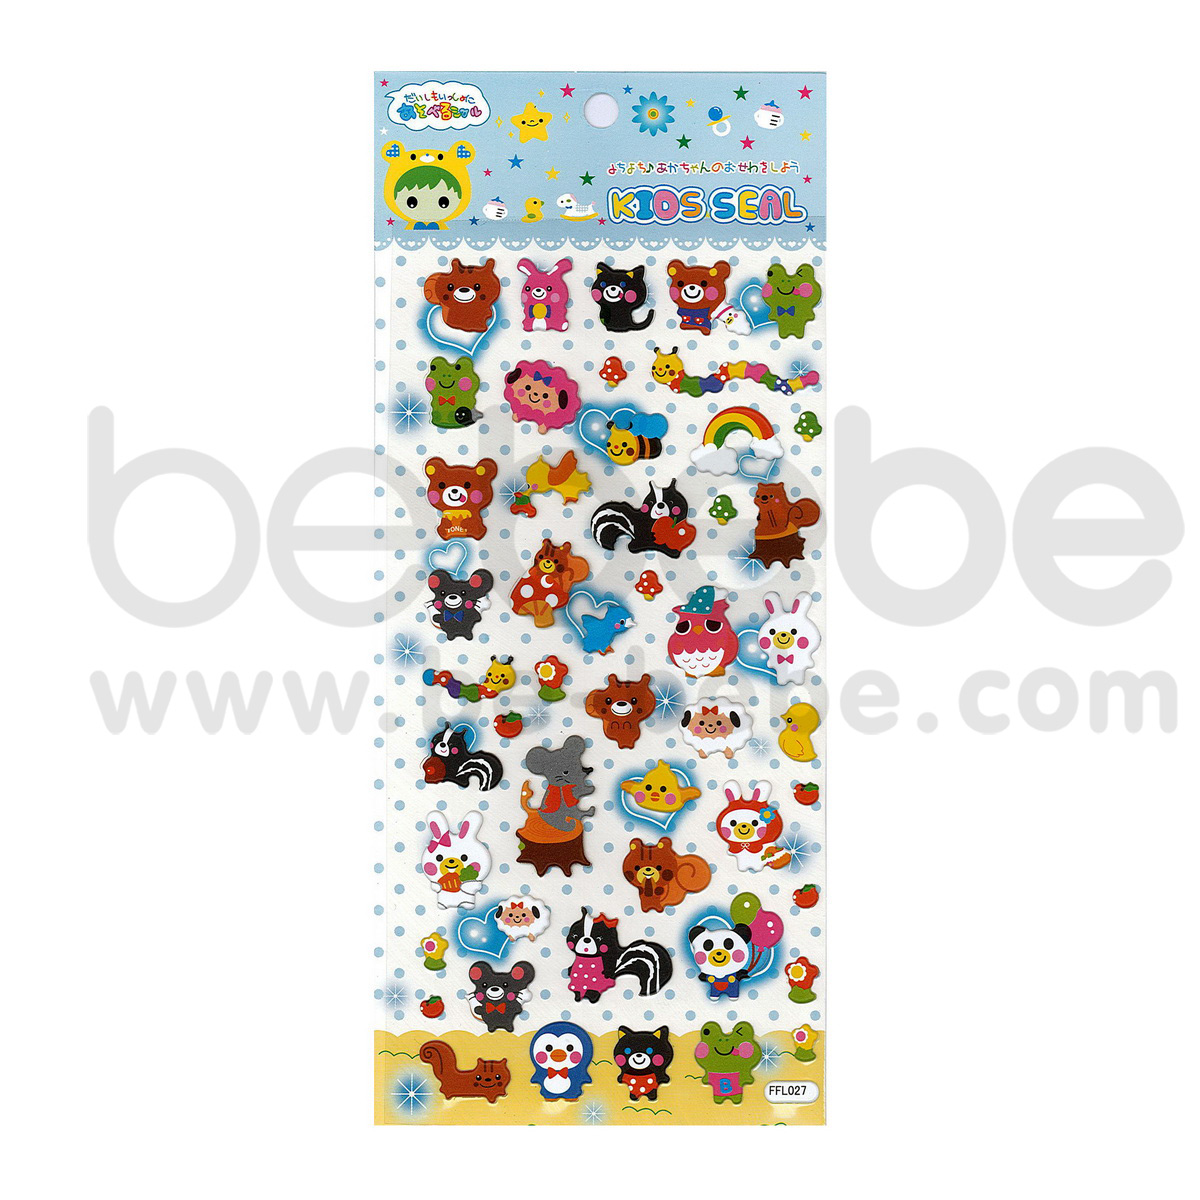 be bebe : Puffy Sticker (8.5x17cm.) / FFL-027